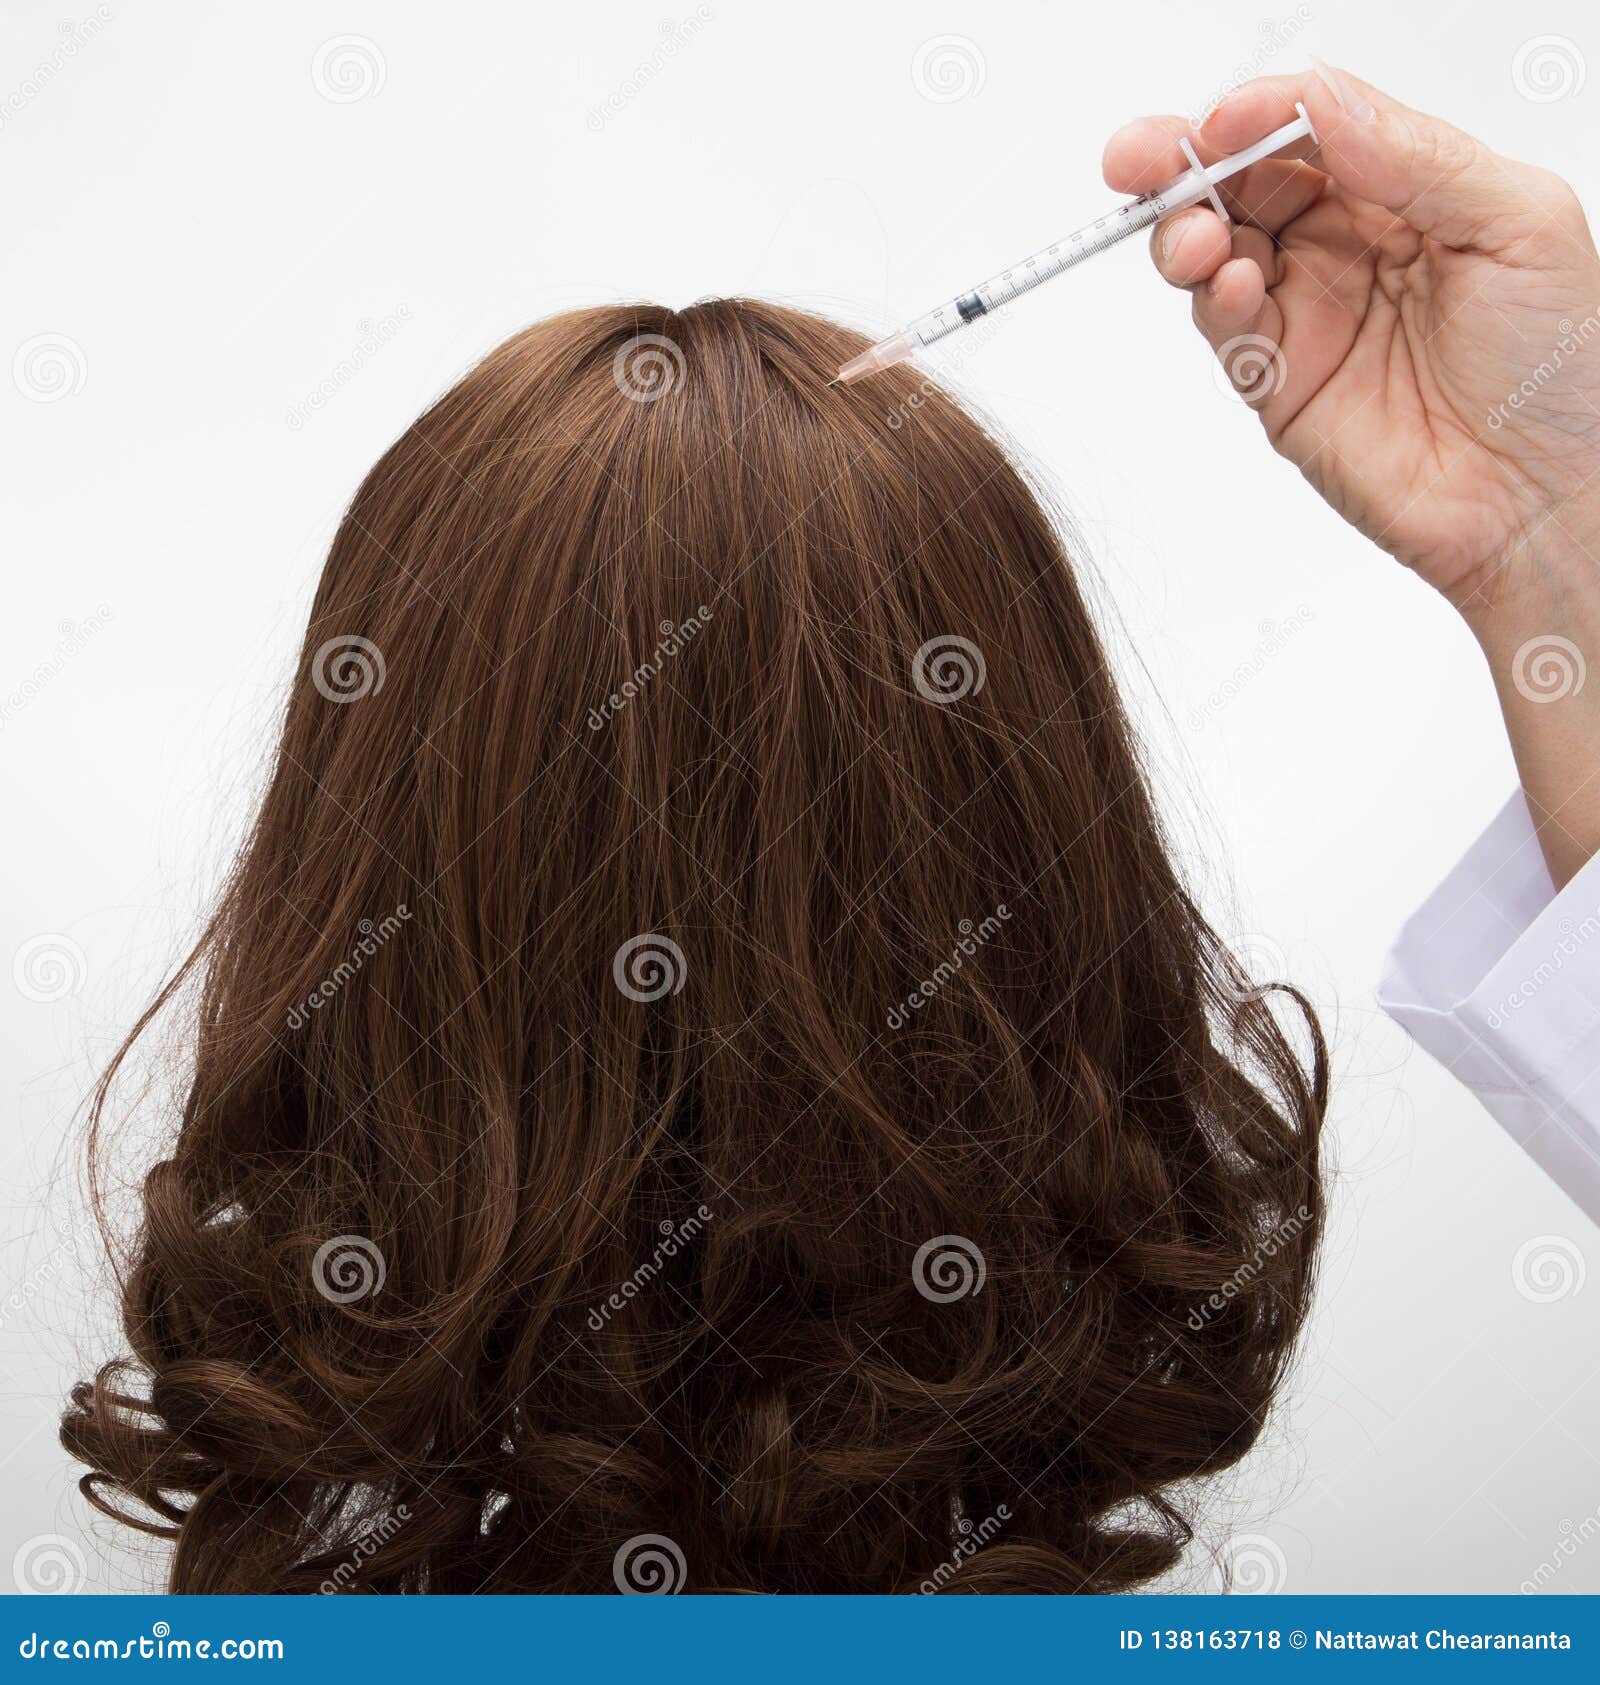 Doctor Inject Treatment Serum Vitamins Hair Fall Stock Photo - Image of  medical, diagnosis: 138163718